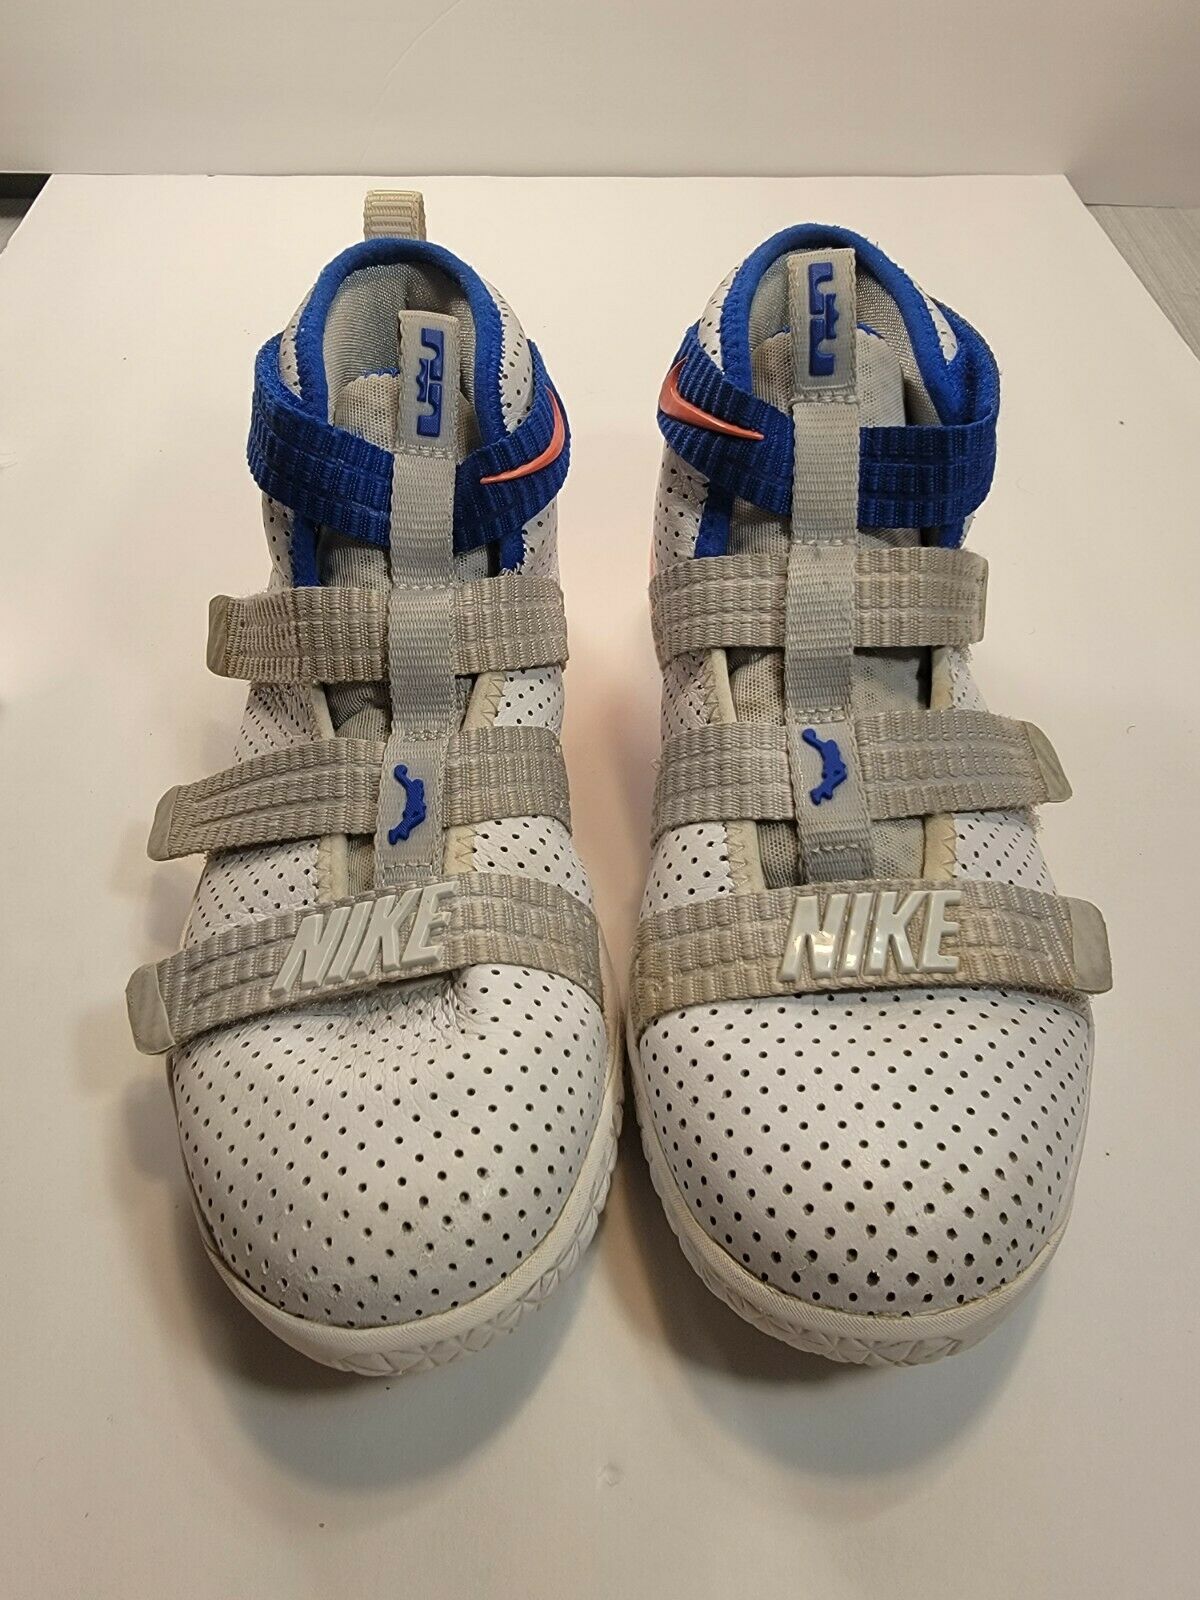 Pre-owned Nike white high tops w/ blue/orange kids tennis/basketball shoes